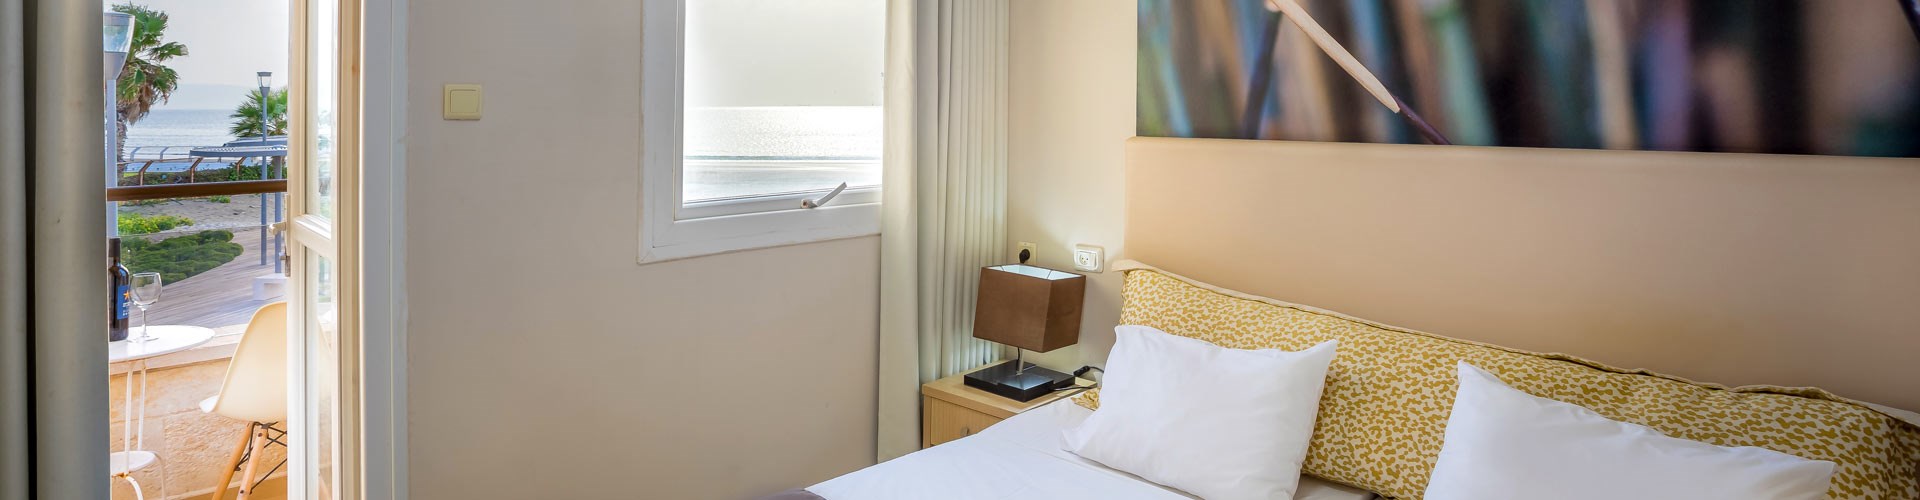 Acco Beach Hotel - rooms